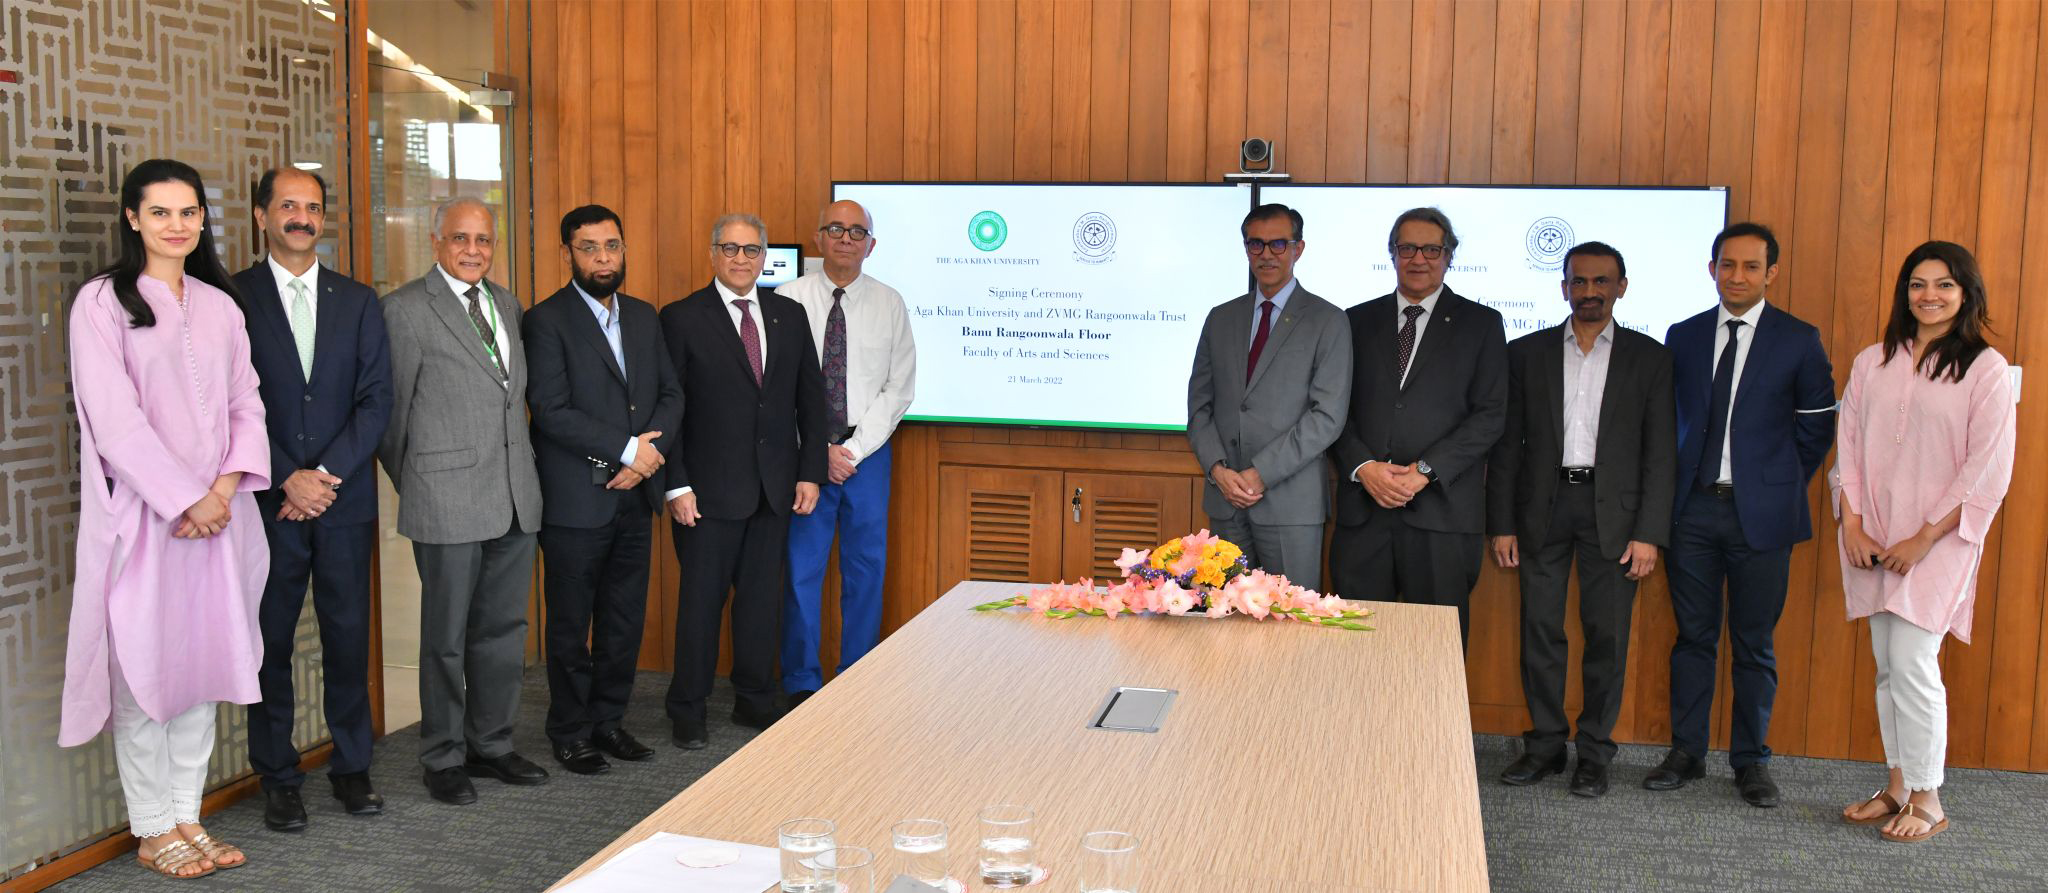 ZVMG Rangoonwala Trust signs Agreement with Aga Khan University